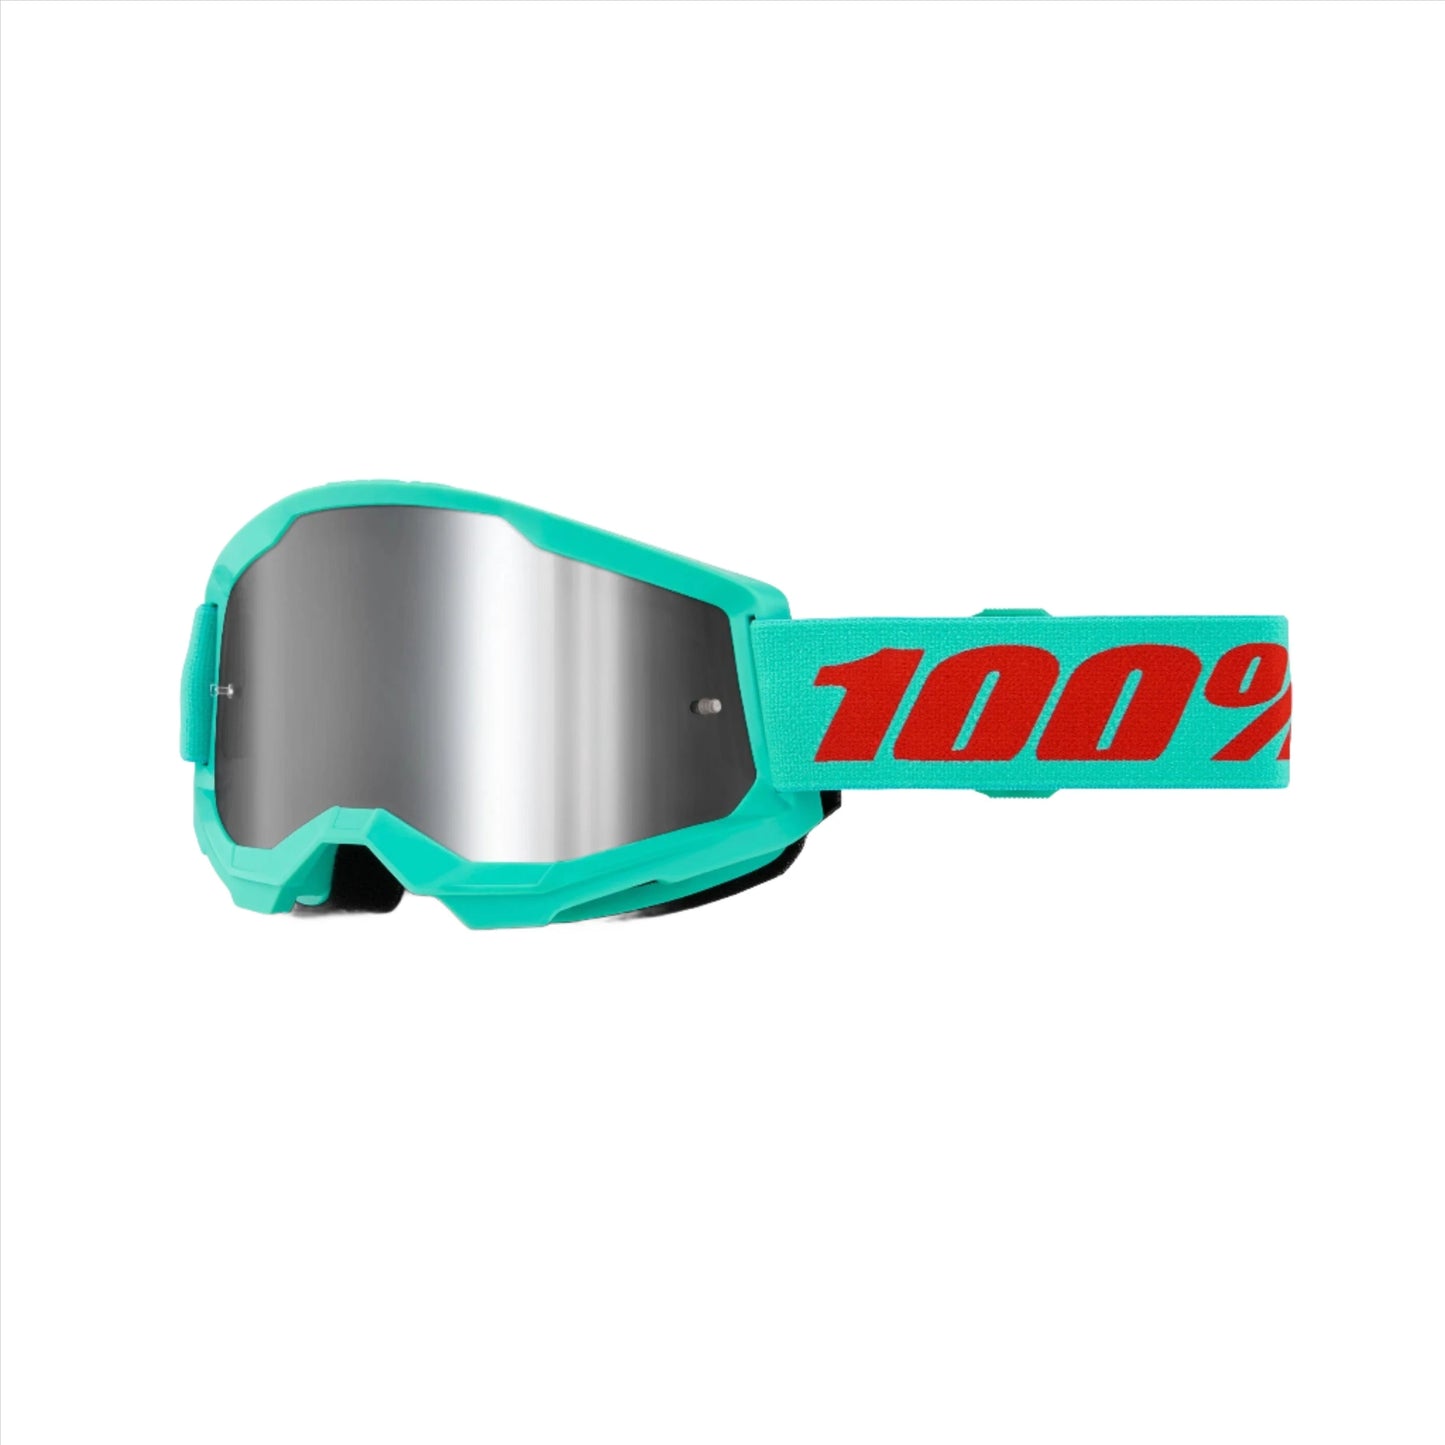 100 Percent Strata 2 Goggles - One Size Fits Most - Maupiti - Mirror Silver Lens